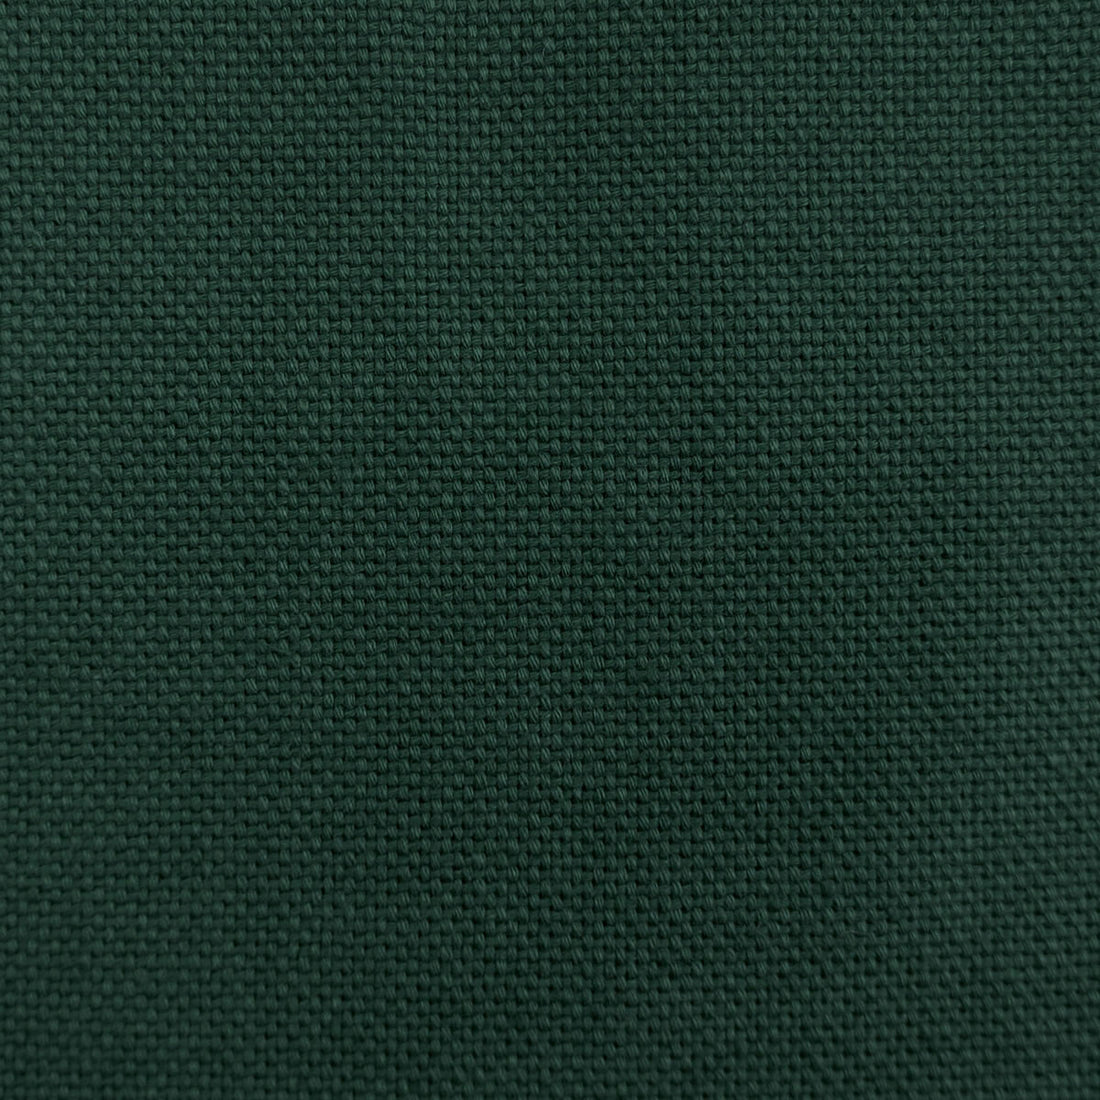 Dobra fabric in verde botella color - pattern LCT1075.032.0 - by Gaston y Daniela in the Lorenzo Castillo VII The Rectory collection